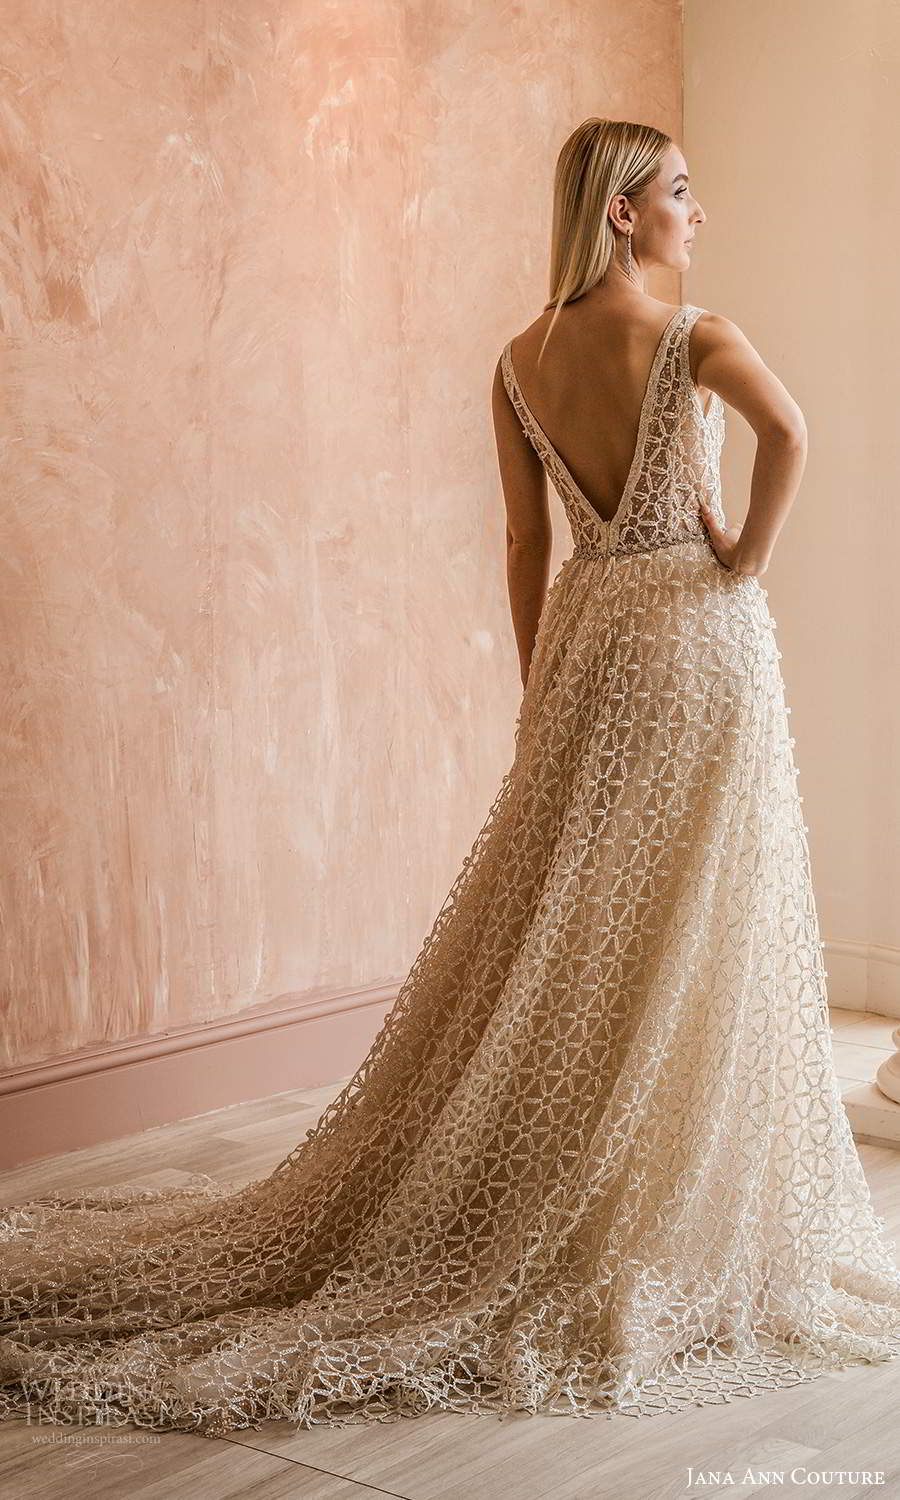 jana ann couture 2021 bridal sleeveless straps v neckline fully embellished a line ball gown wedding dress chapel train v back (8) bv